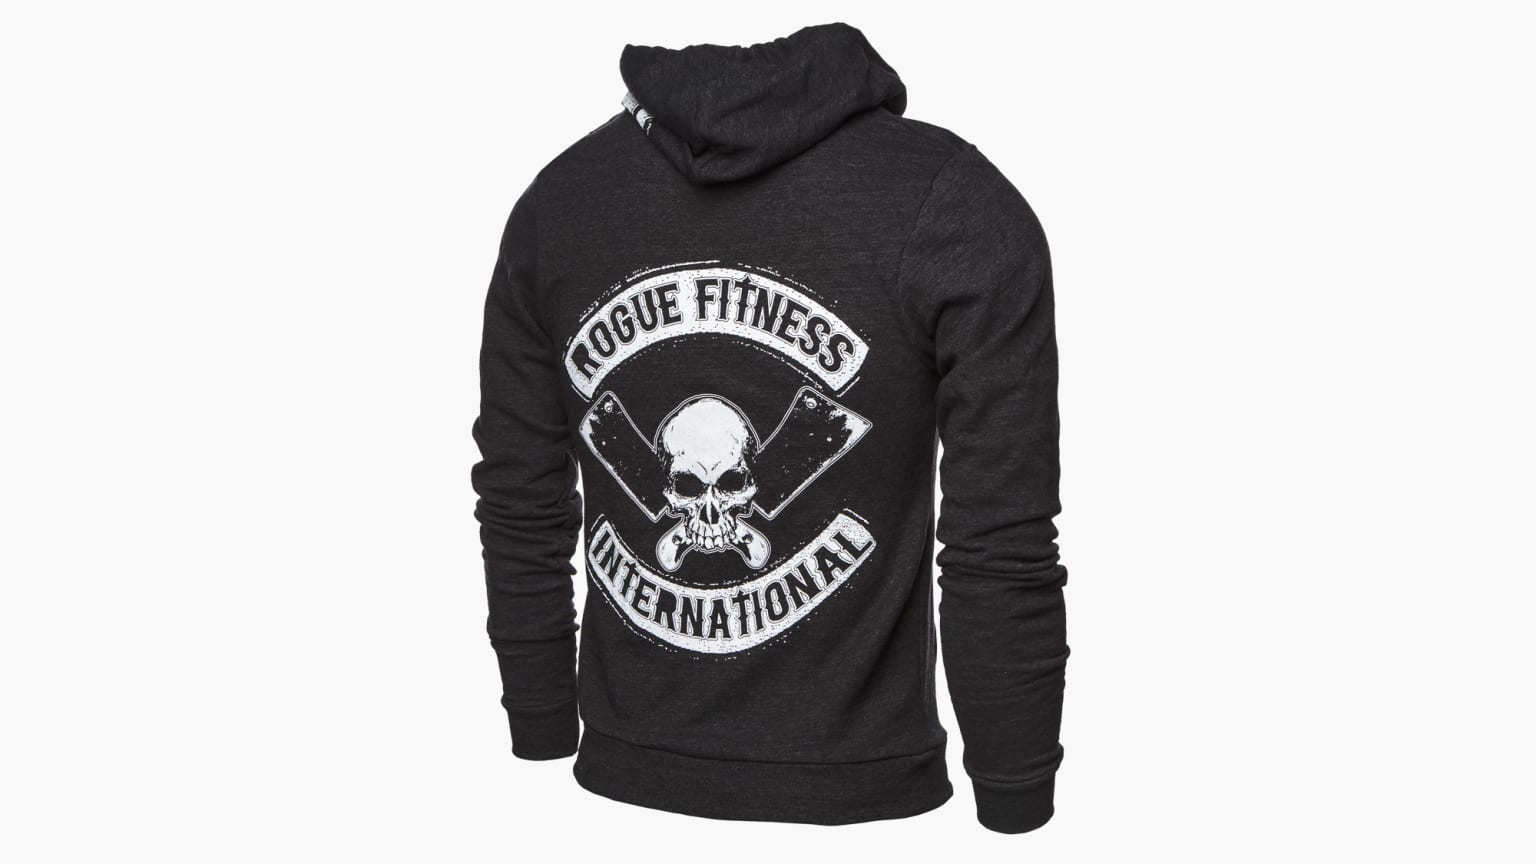 Rogue International Hoodie - Sweatshirt - Tri-Blend Black | Rogue Fitness DE